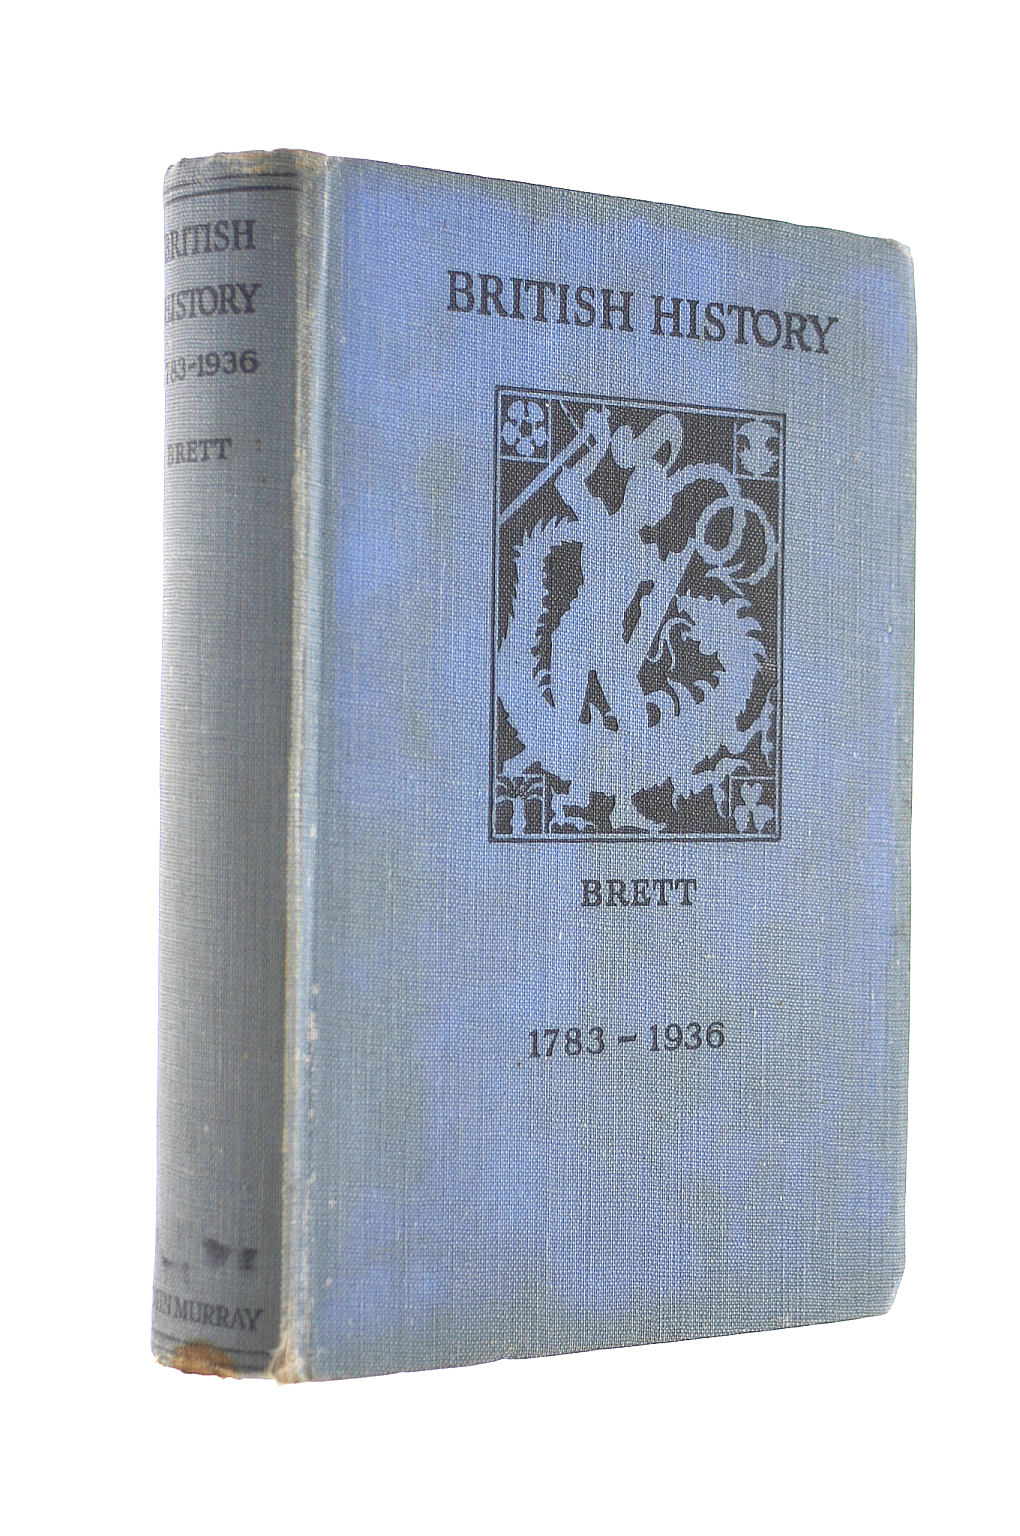 S REED BRETT - British History 1783-1936, a School Certificate Course